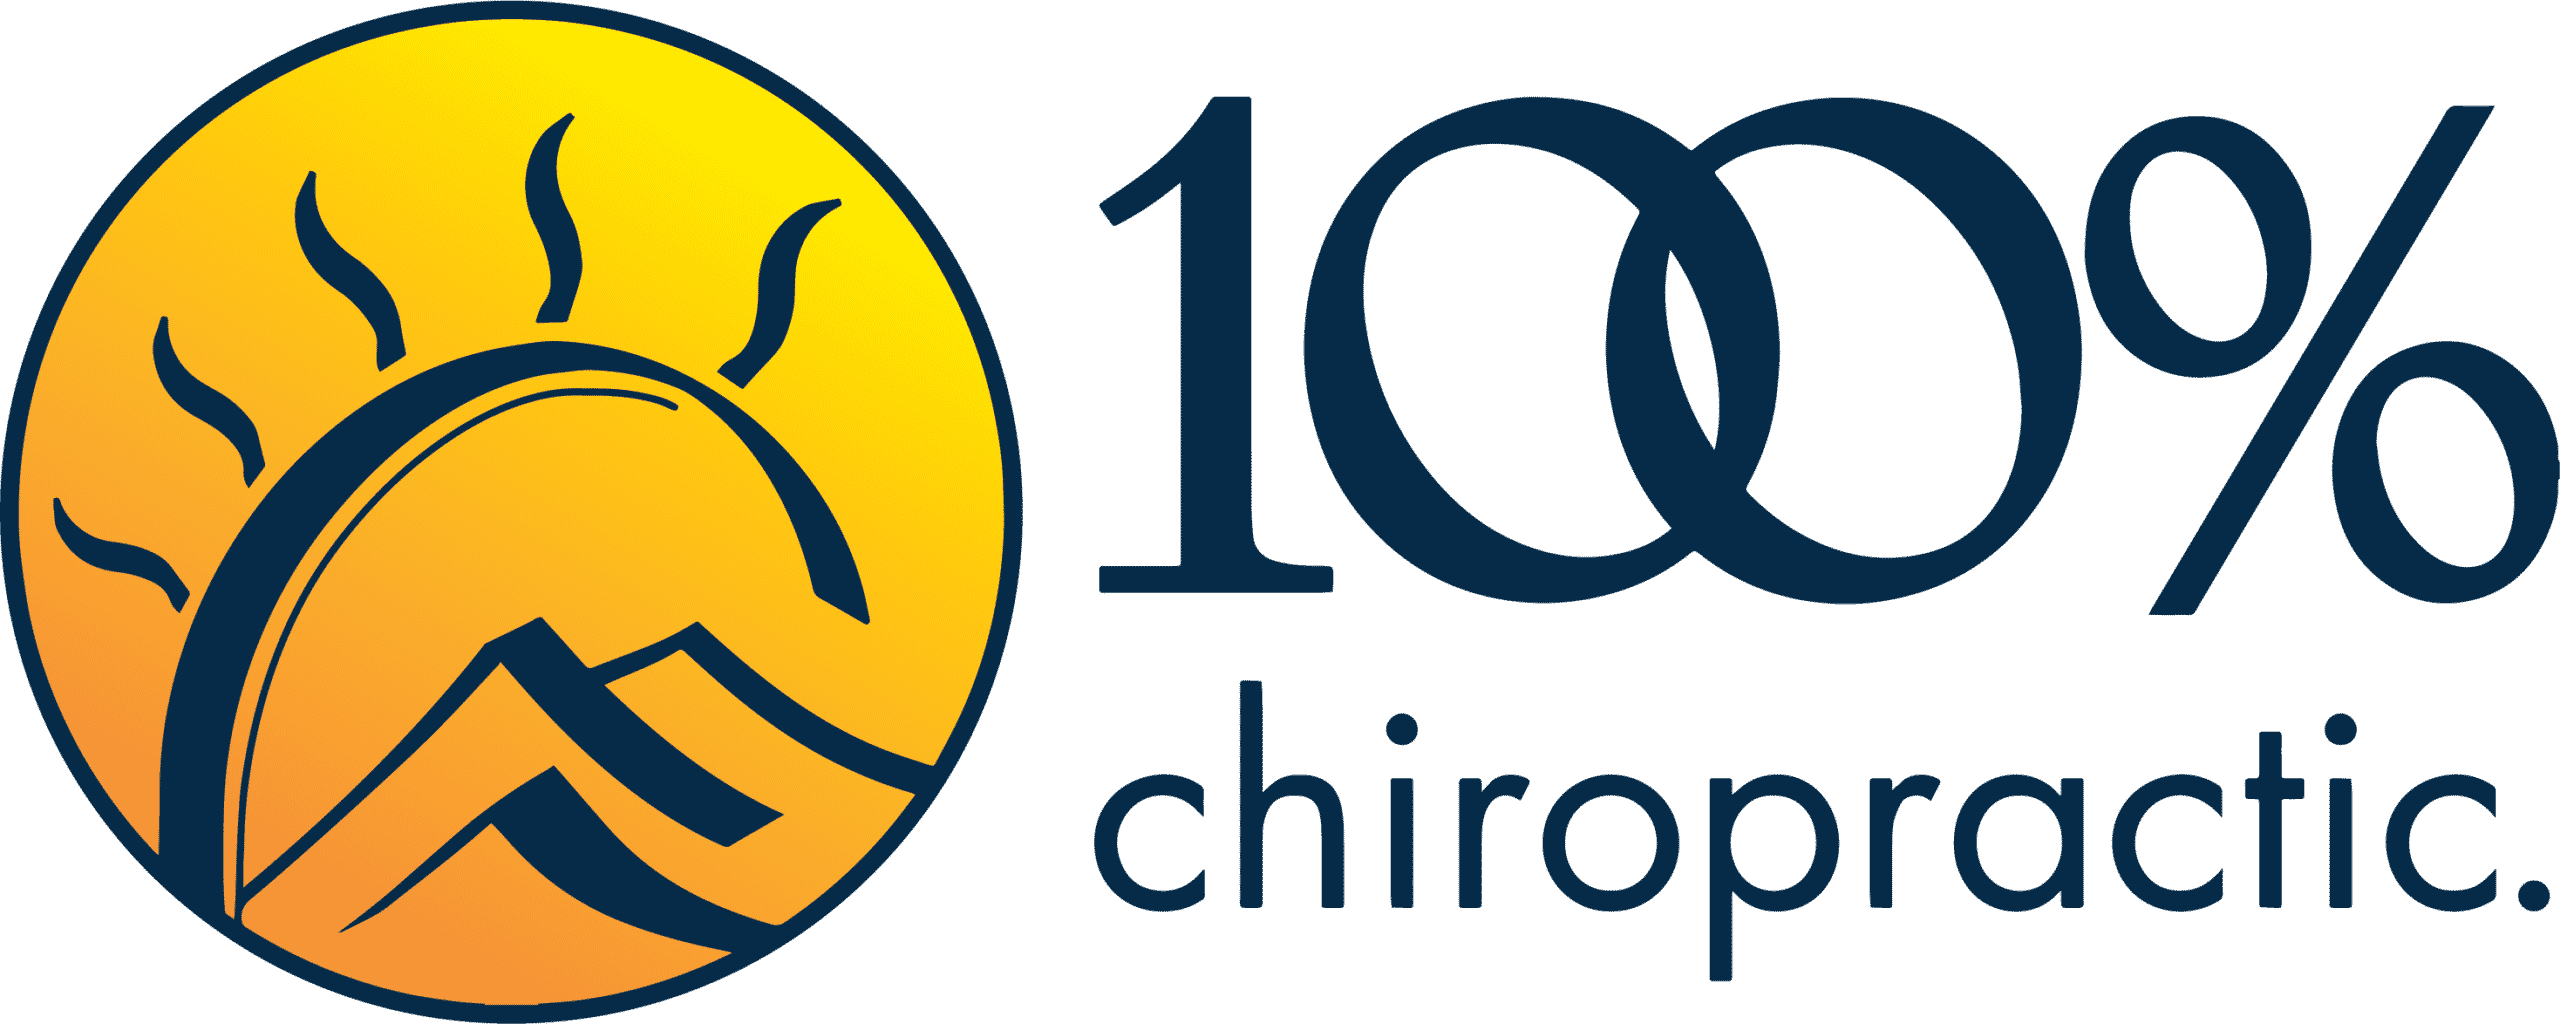 100% Chiropractic Franchise Logo